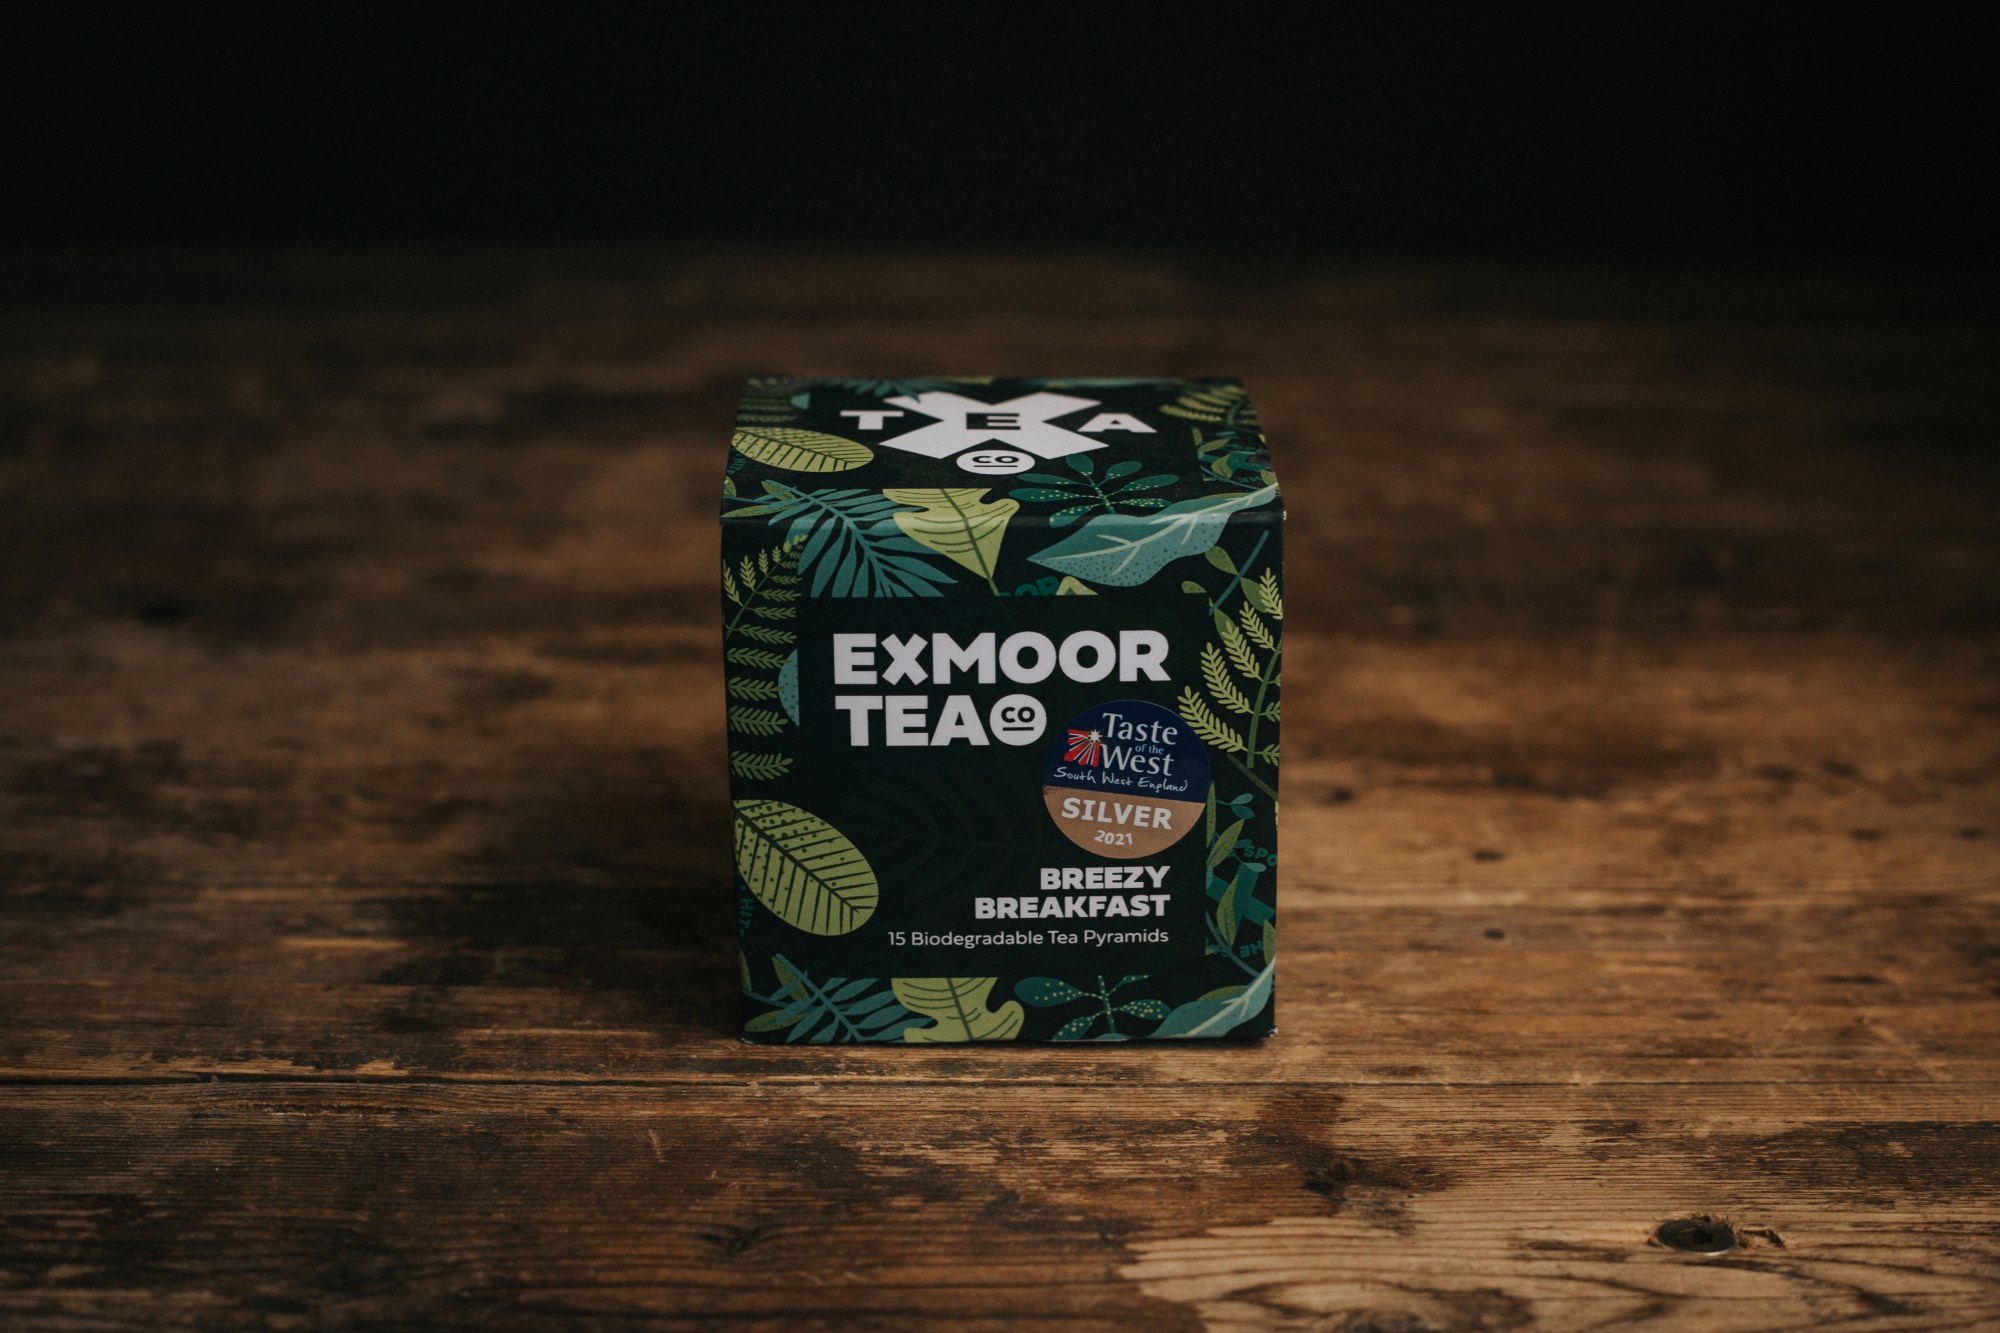 Exmoor Tea Co. Breezy Breakfast Tea Pyramids